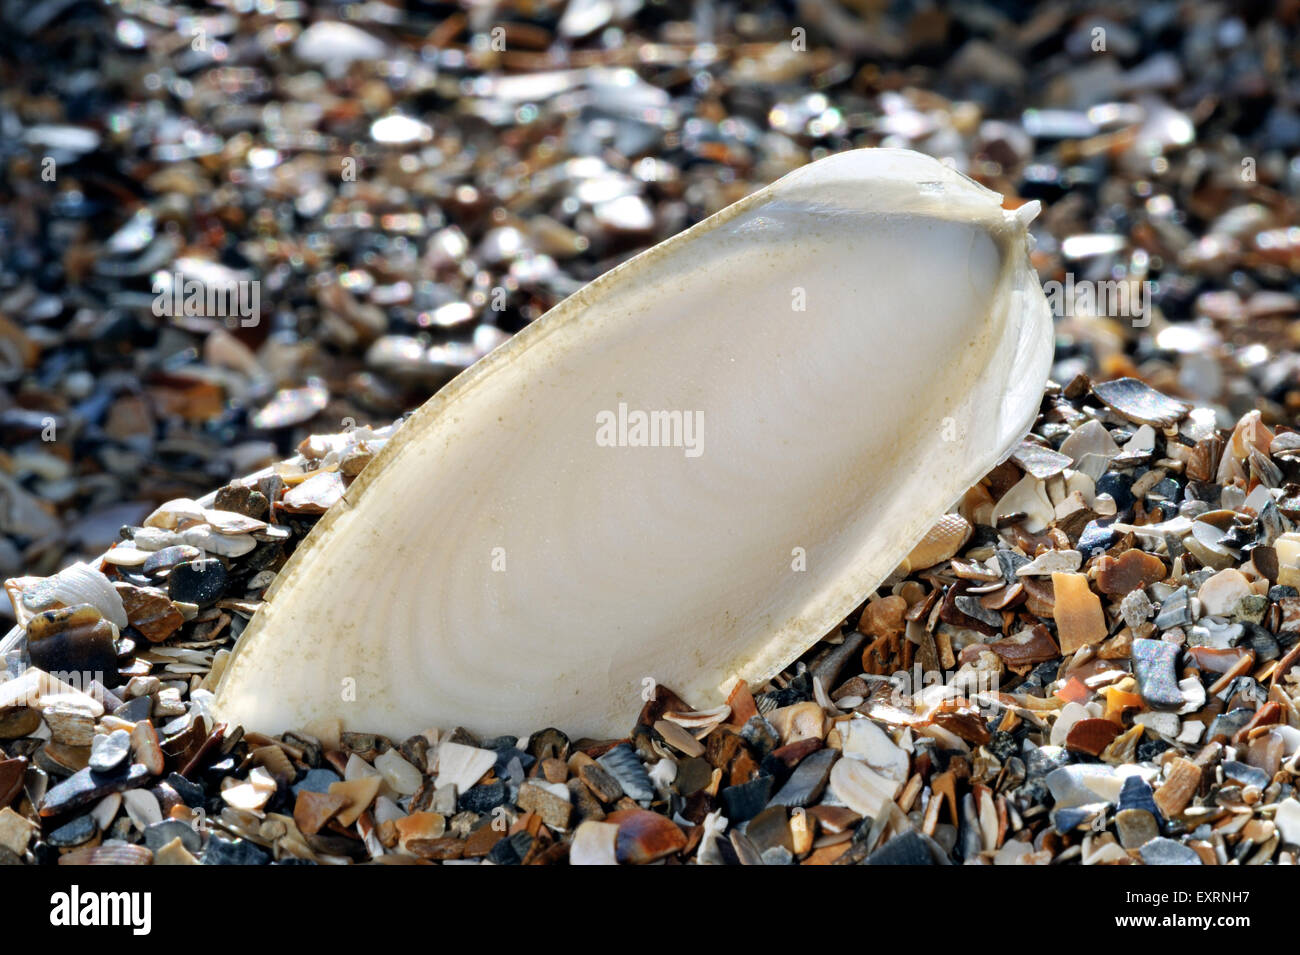 Cuttlebone / cuttlefish bone, internal shell from European common cuttlefish (Sepia officinalis) washed on beach Stock Photo